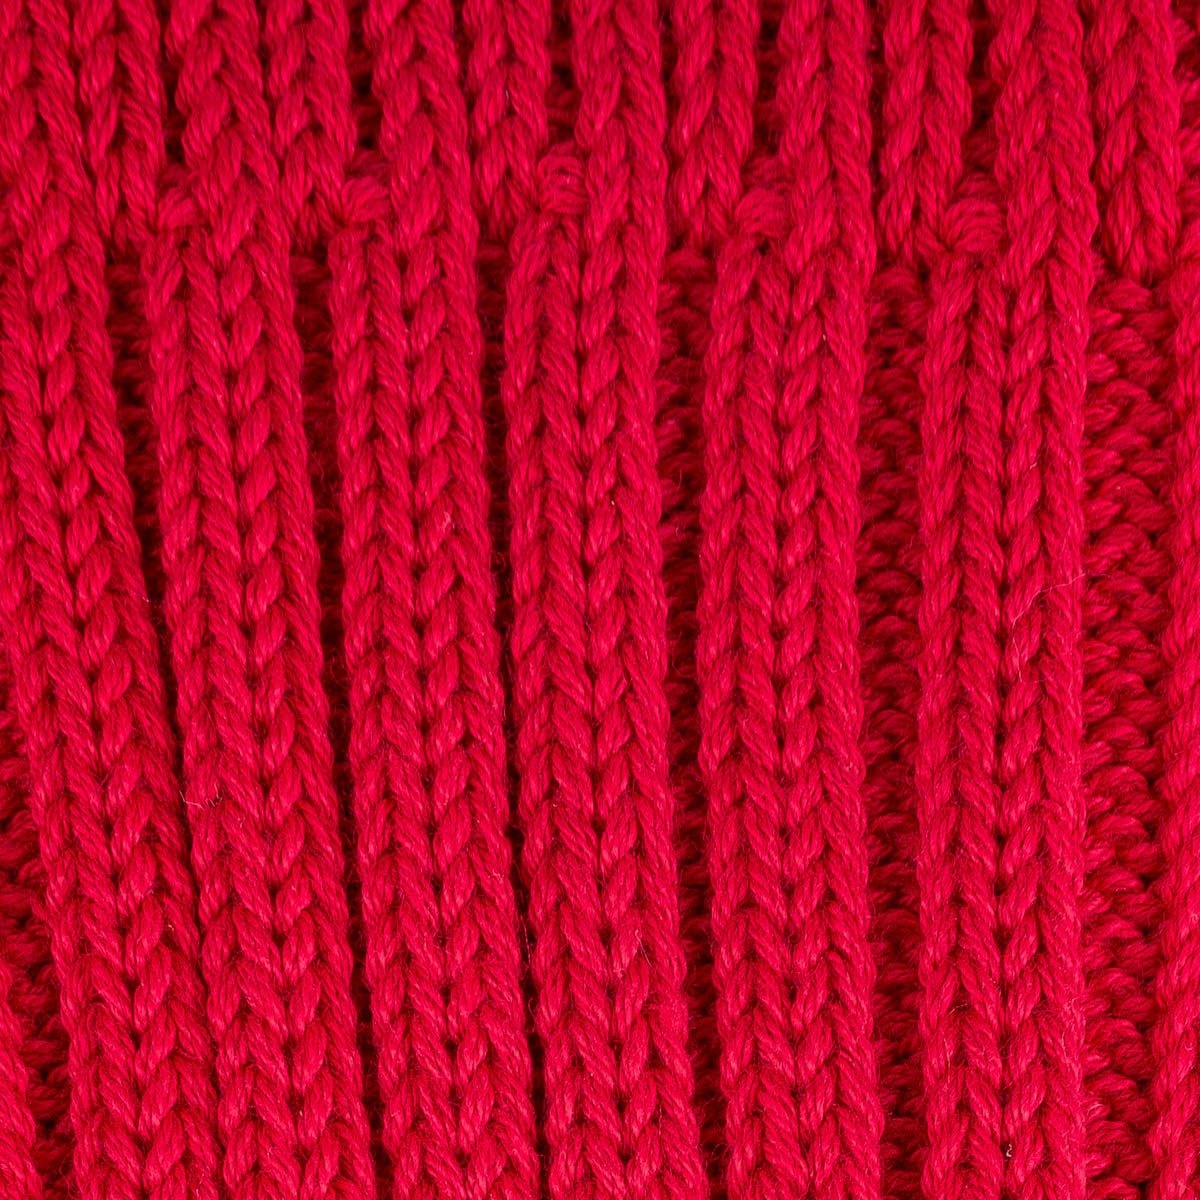 DEC-CAS-RED Decka Cased Heavyweight Plain Socks - Red - 2